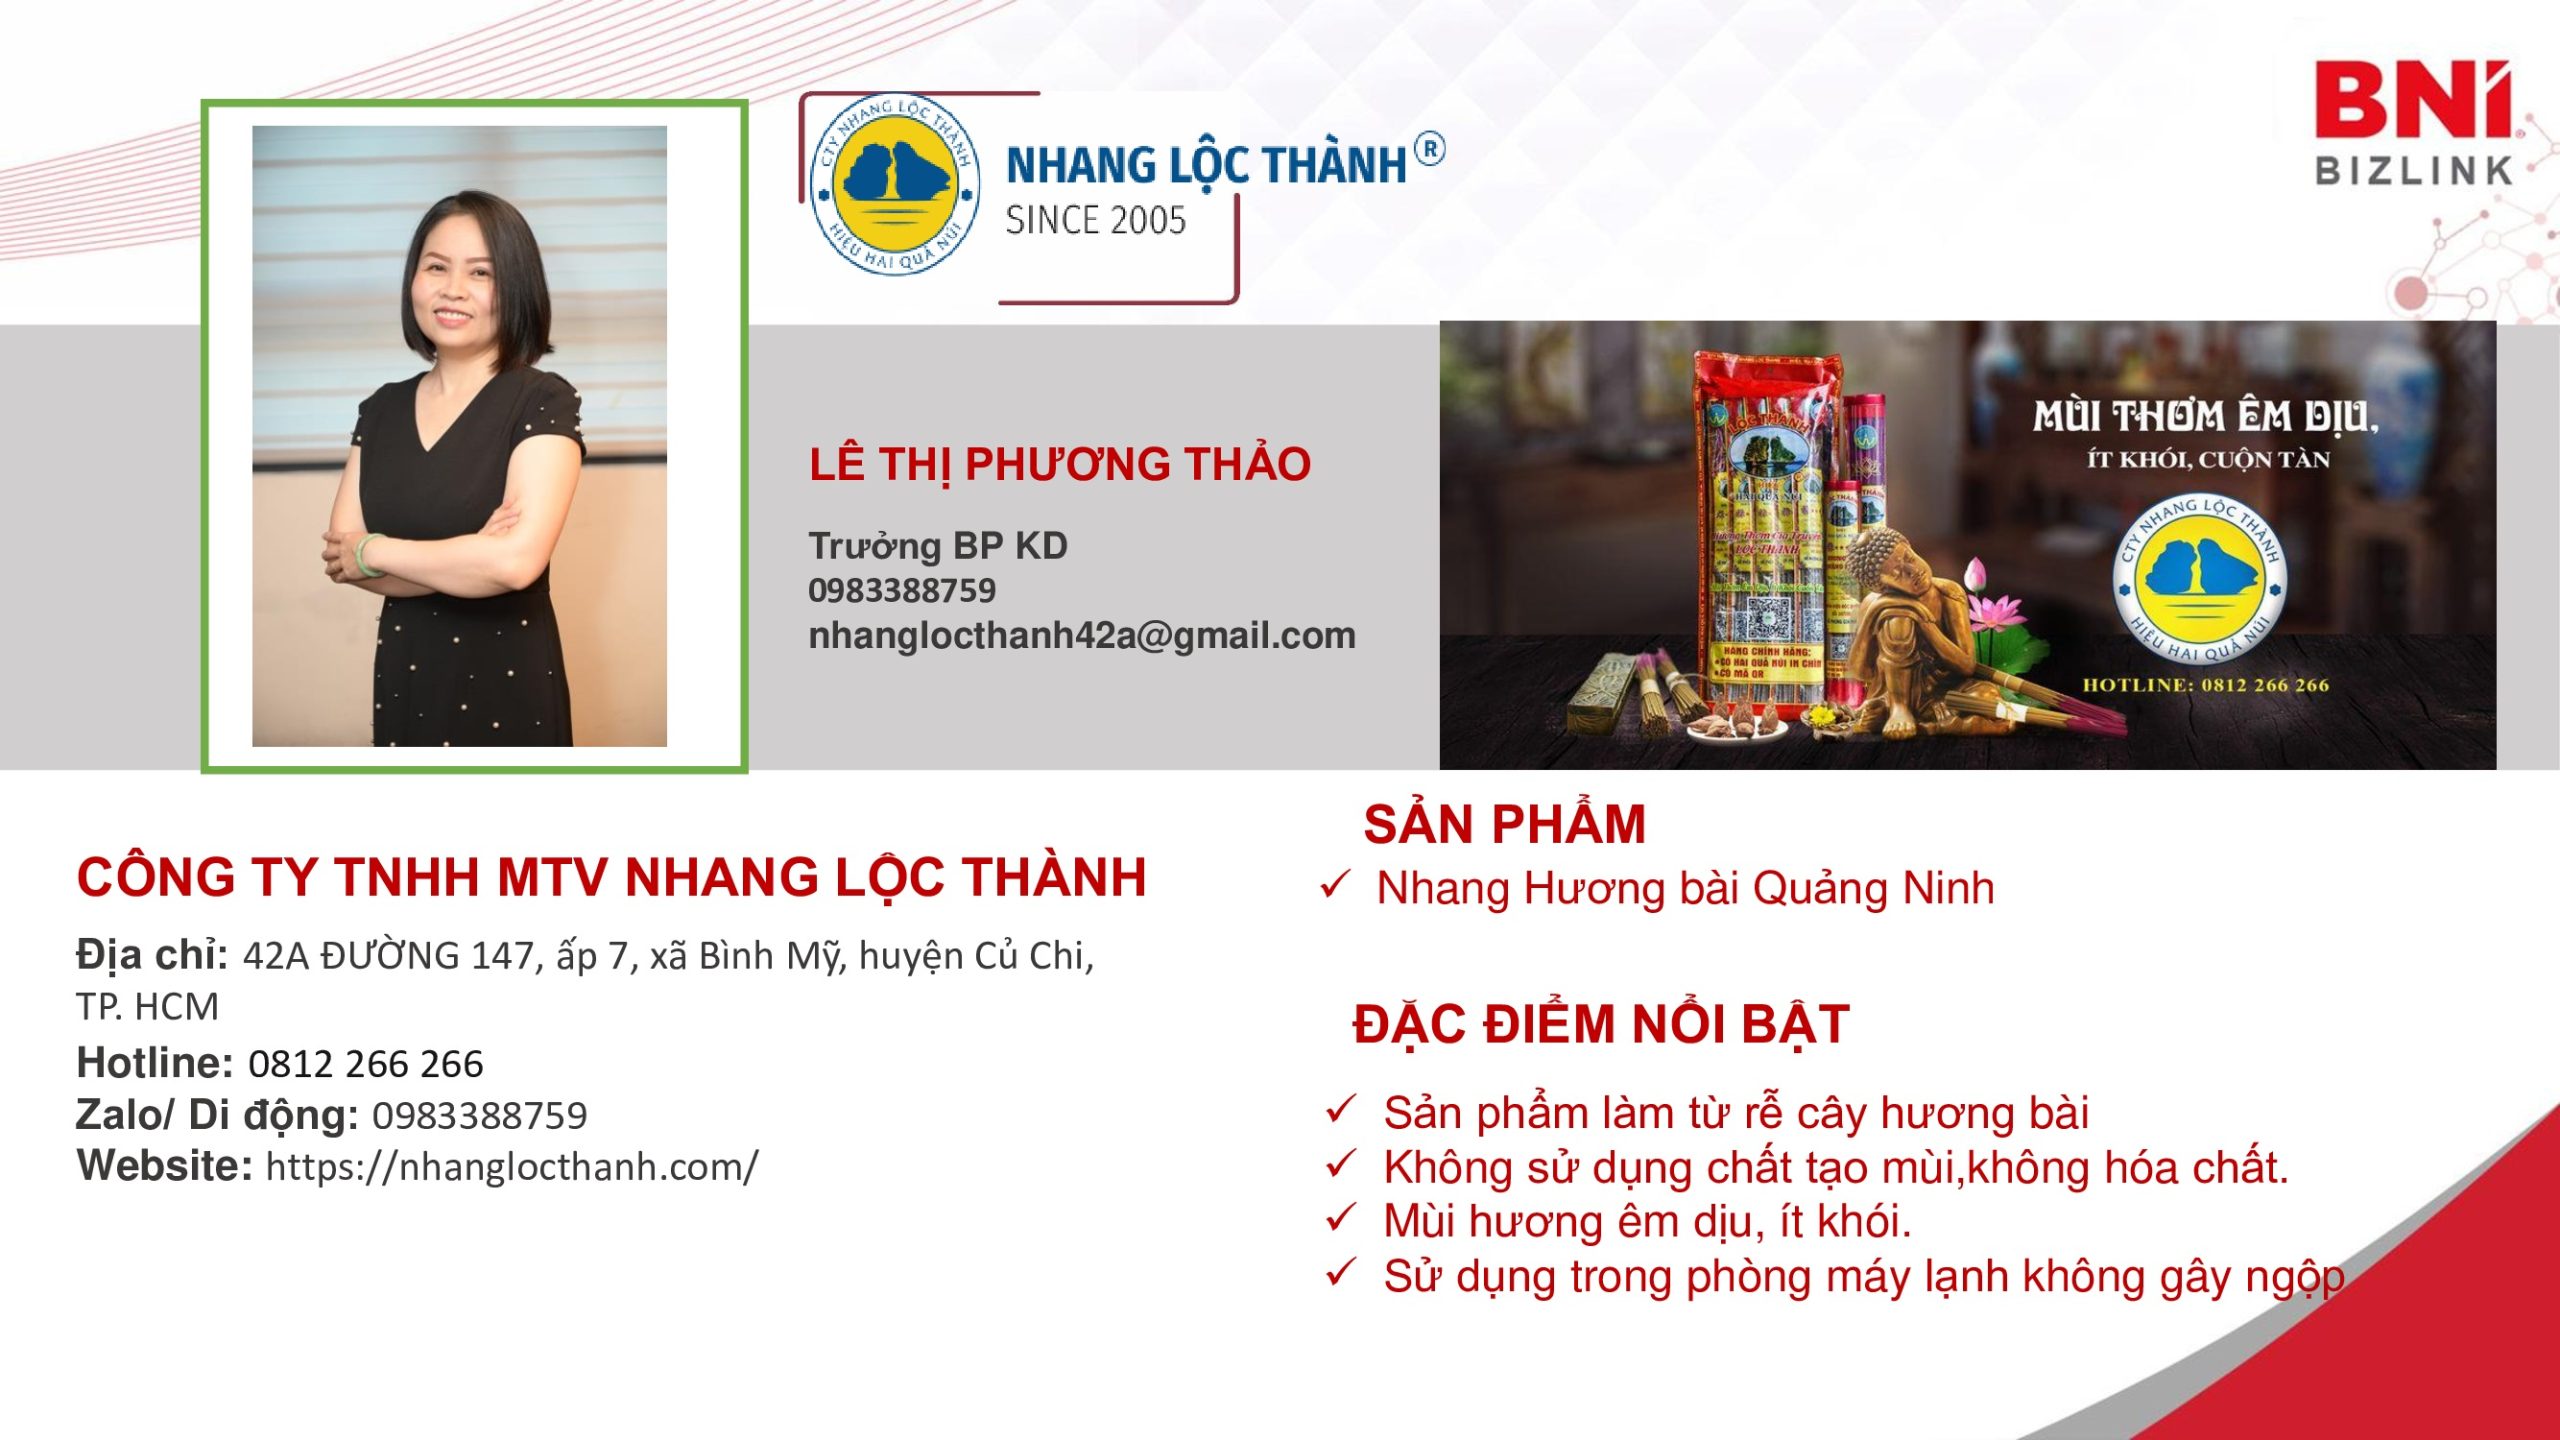 Le-Thi-Phuong-Thao